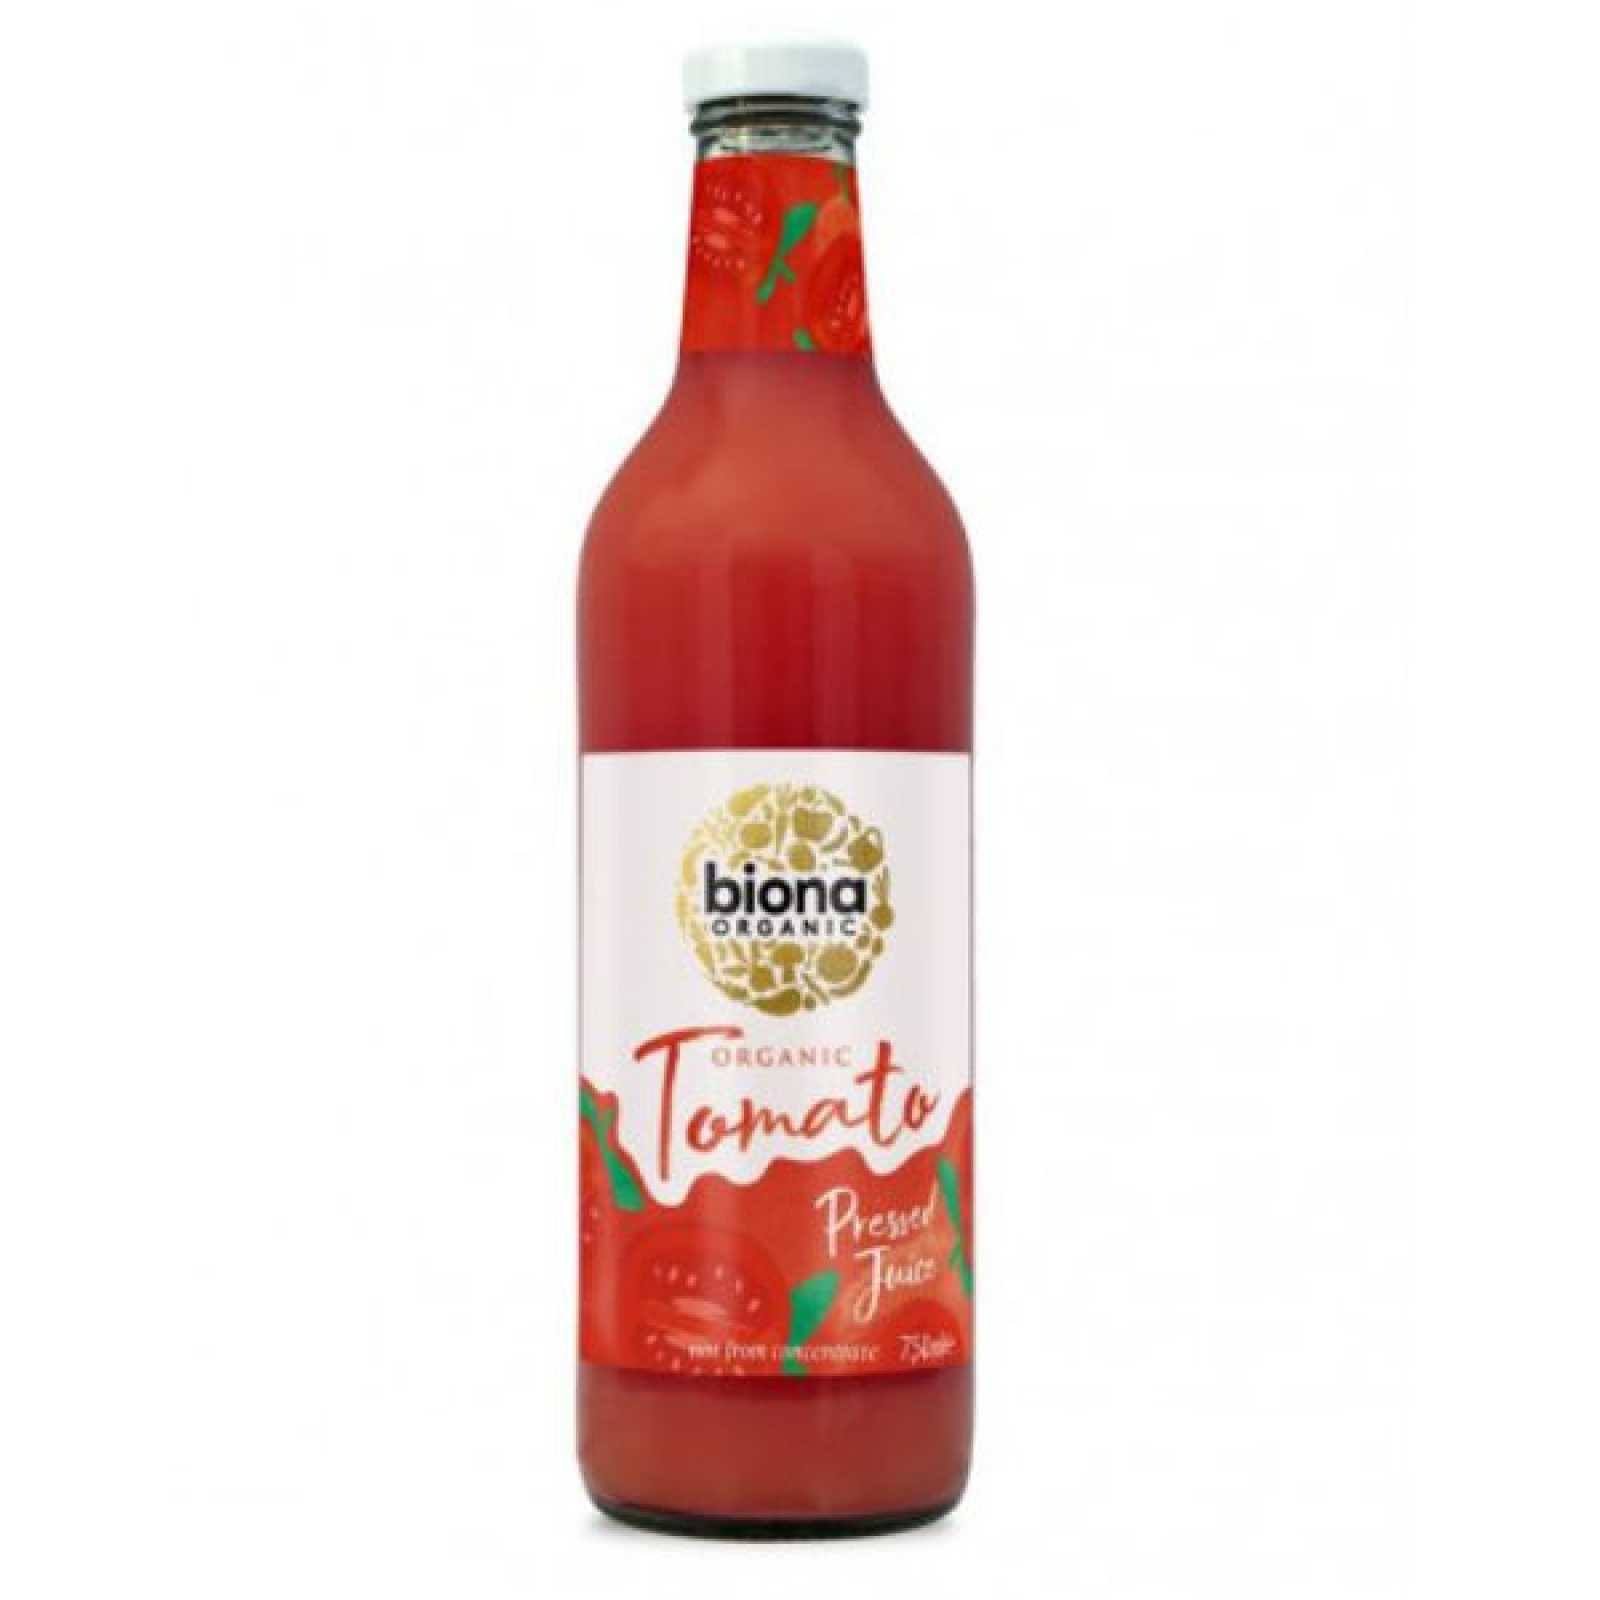 Biona - Organic Tomato Juice (Pressed) 750ml